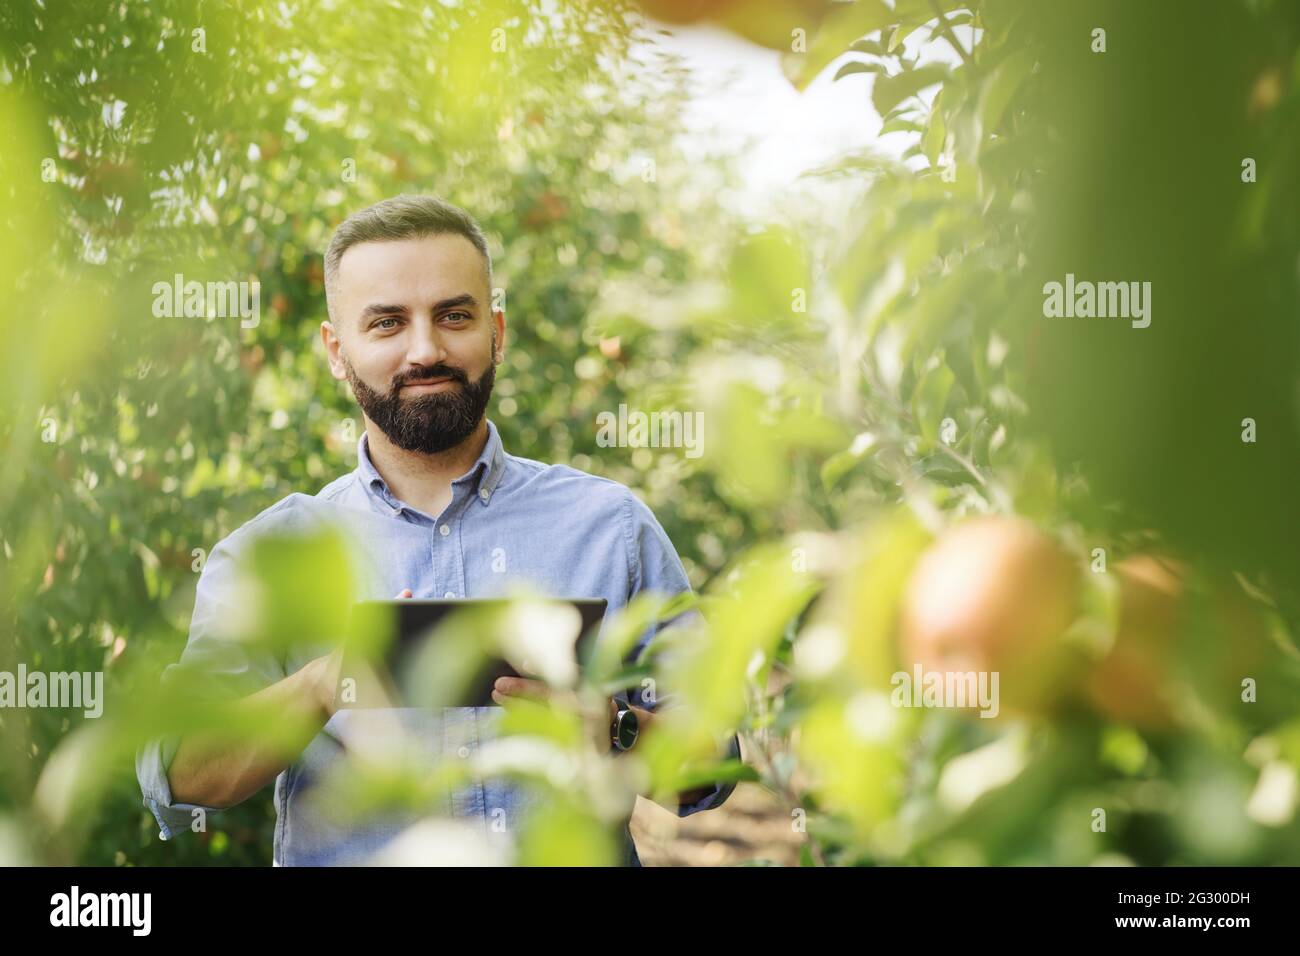 Orchard management, seasonal work and crop control on organic farm Stock Photo